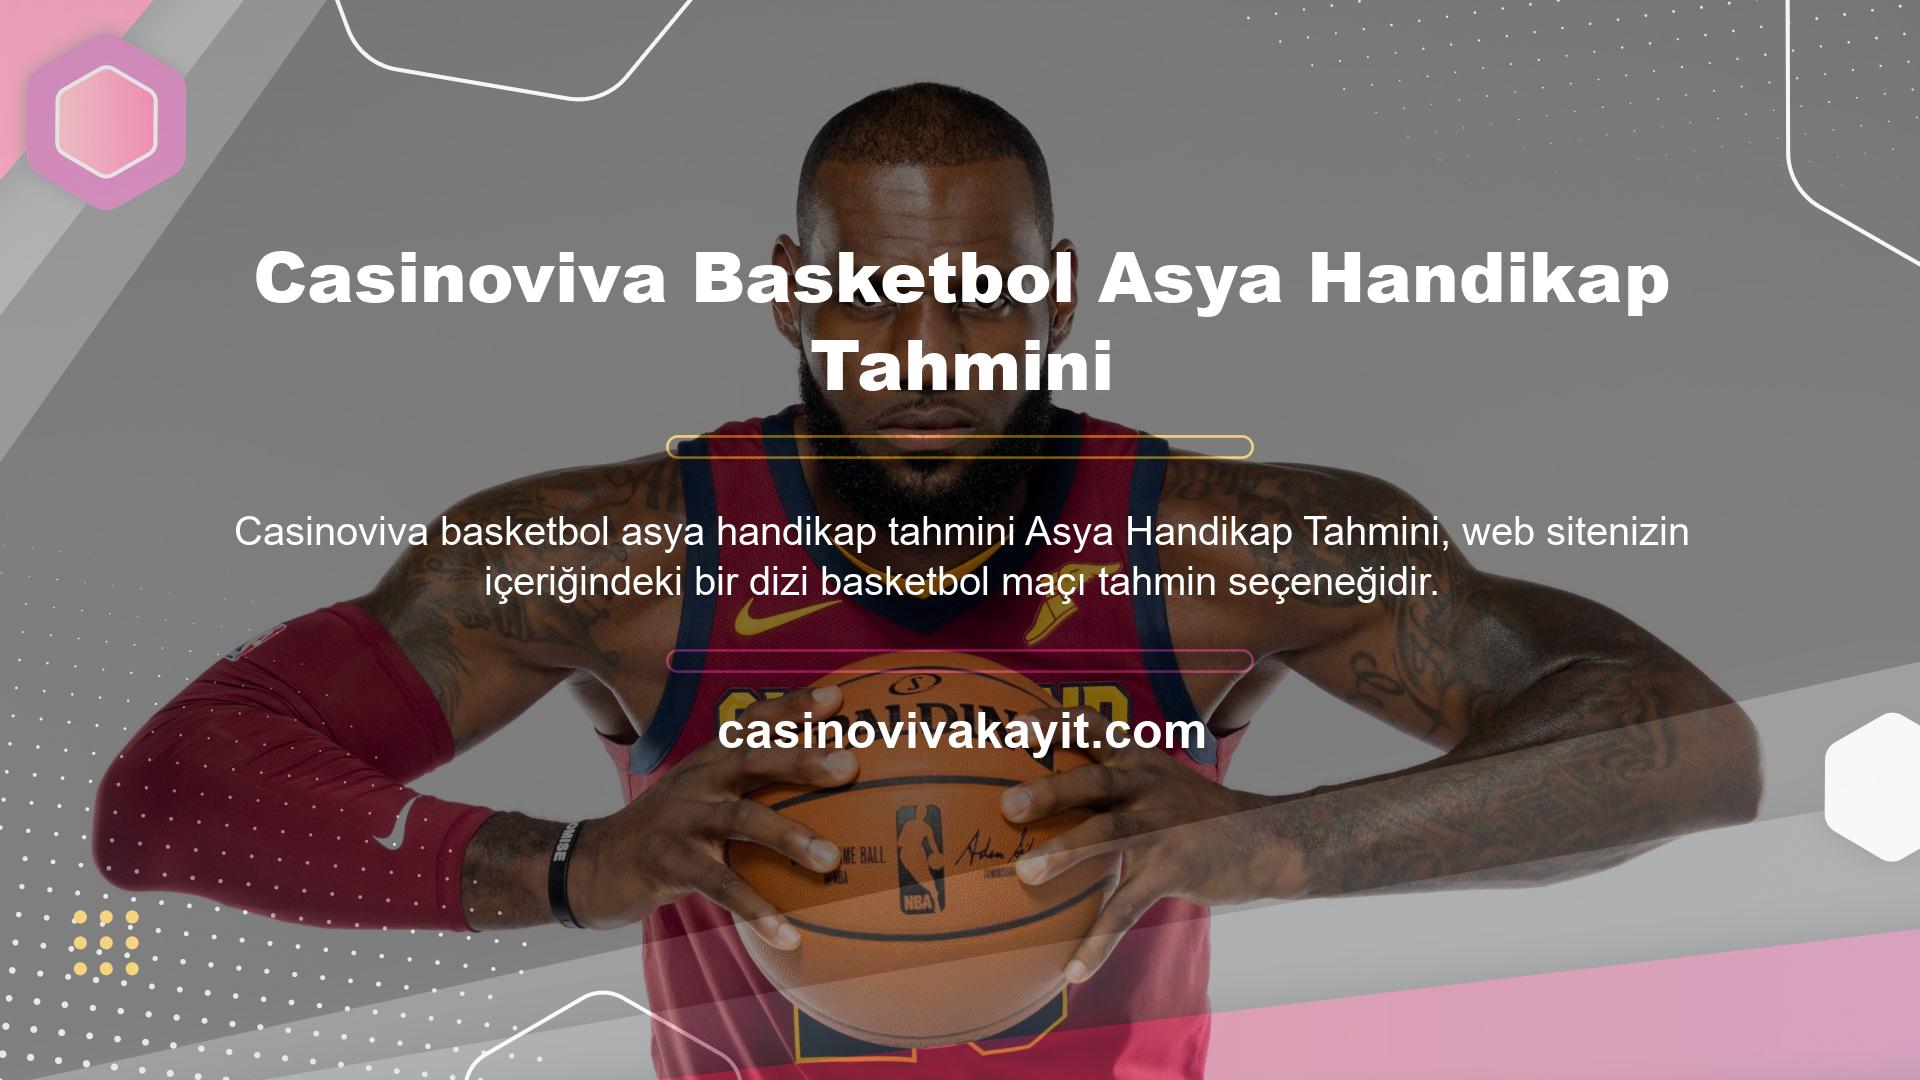 Casinoviva Basketbol Asya Handikap Tahmini